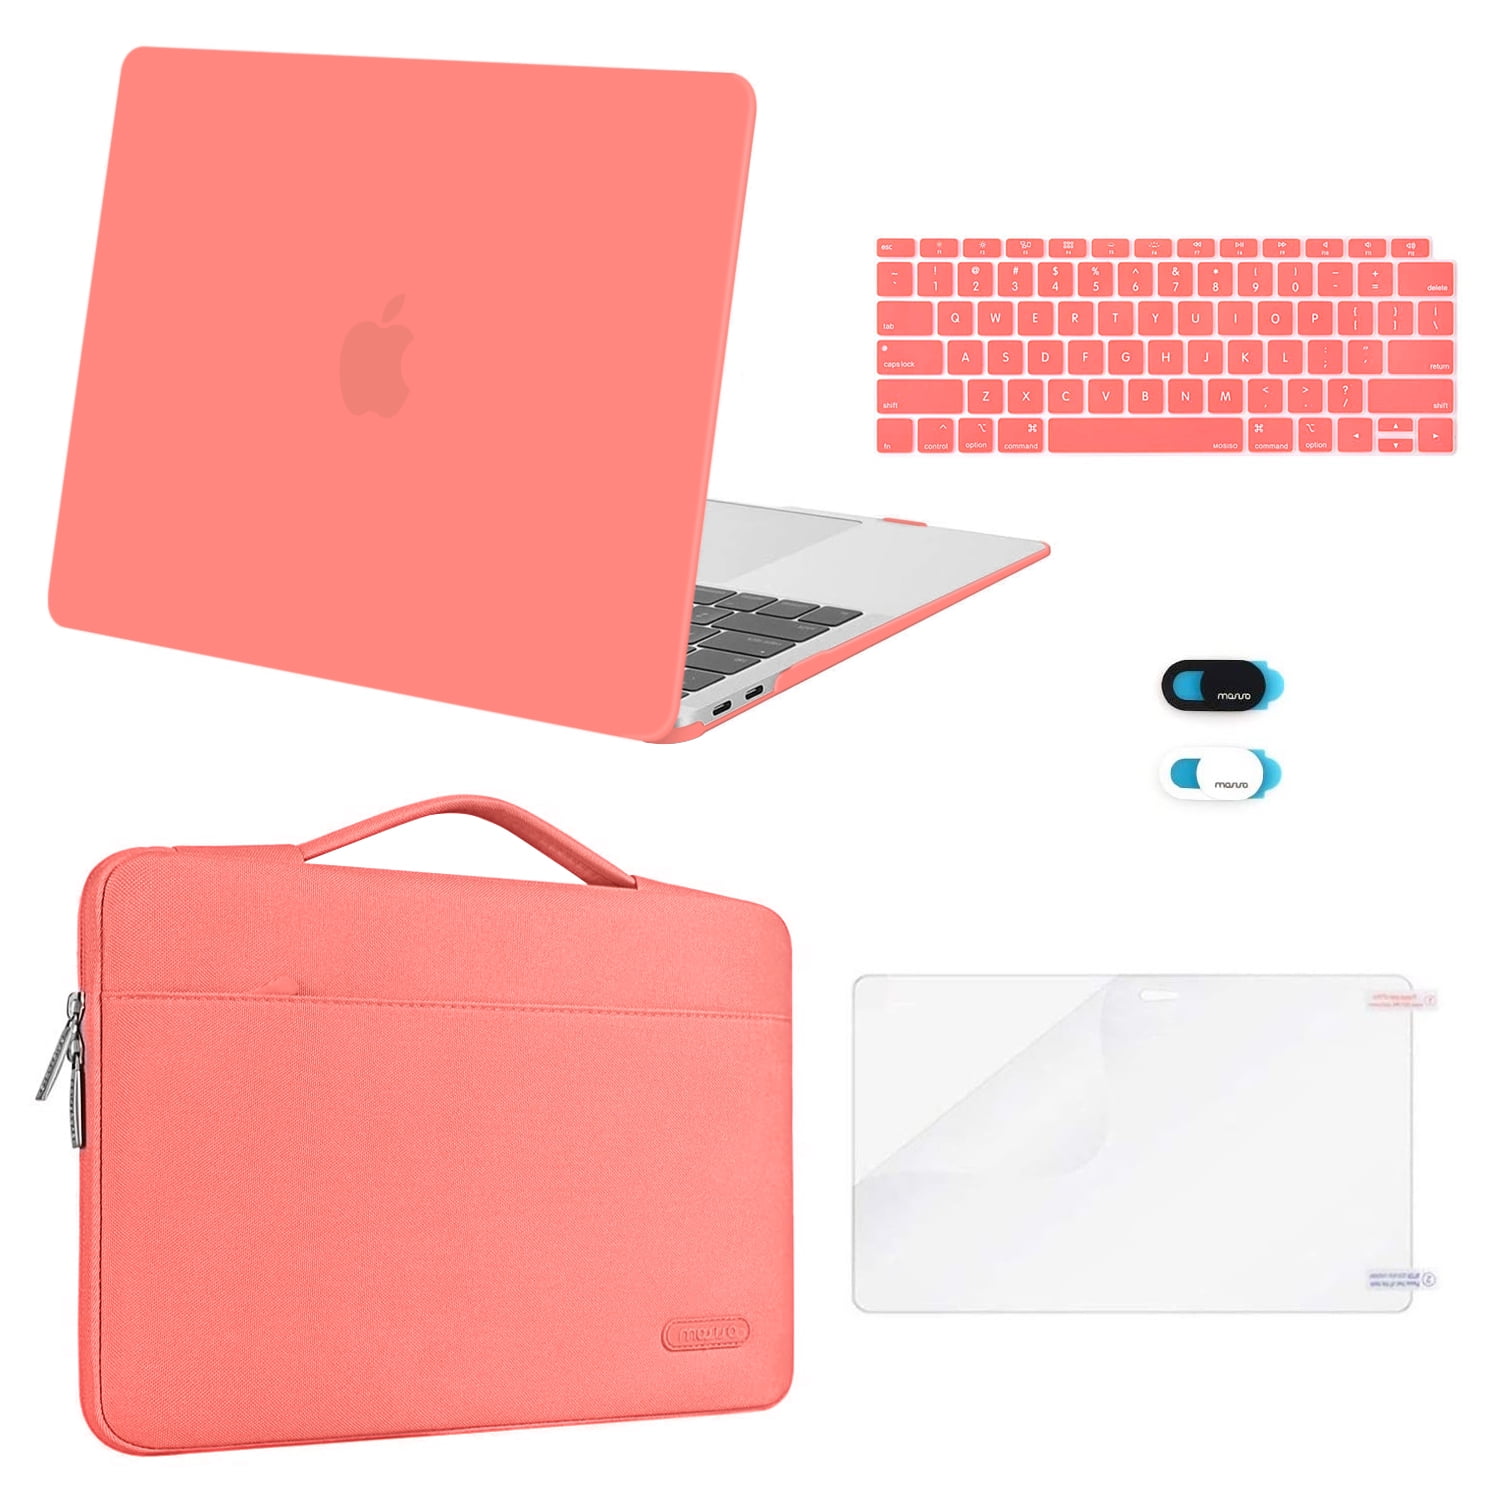 Funny live Felt Mackbook Case Laptop Protective Bag MacBook Apple Laptop Sleeve Case Pouch Pocket Cover Carrying Envelope 13